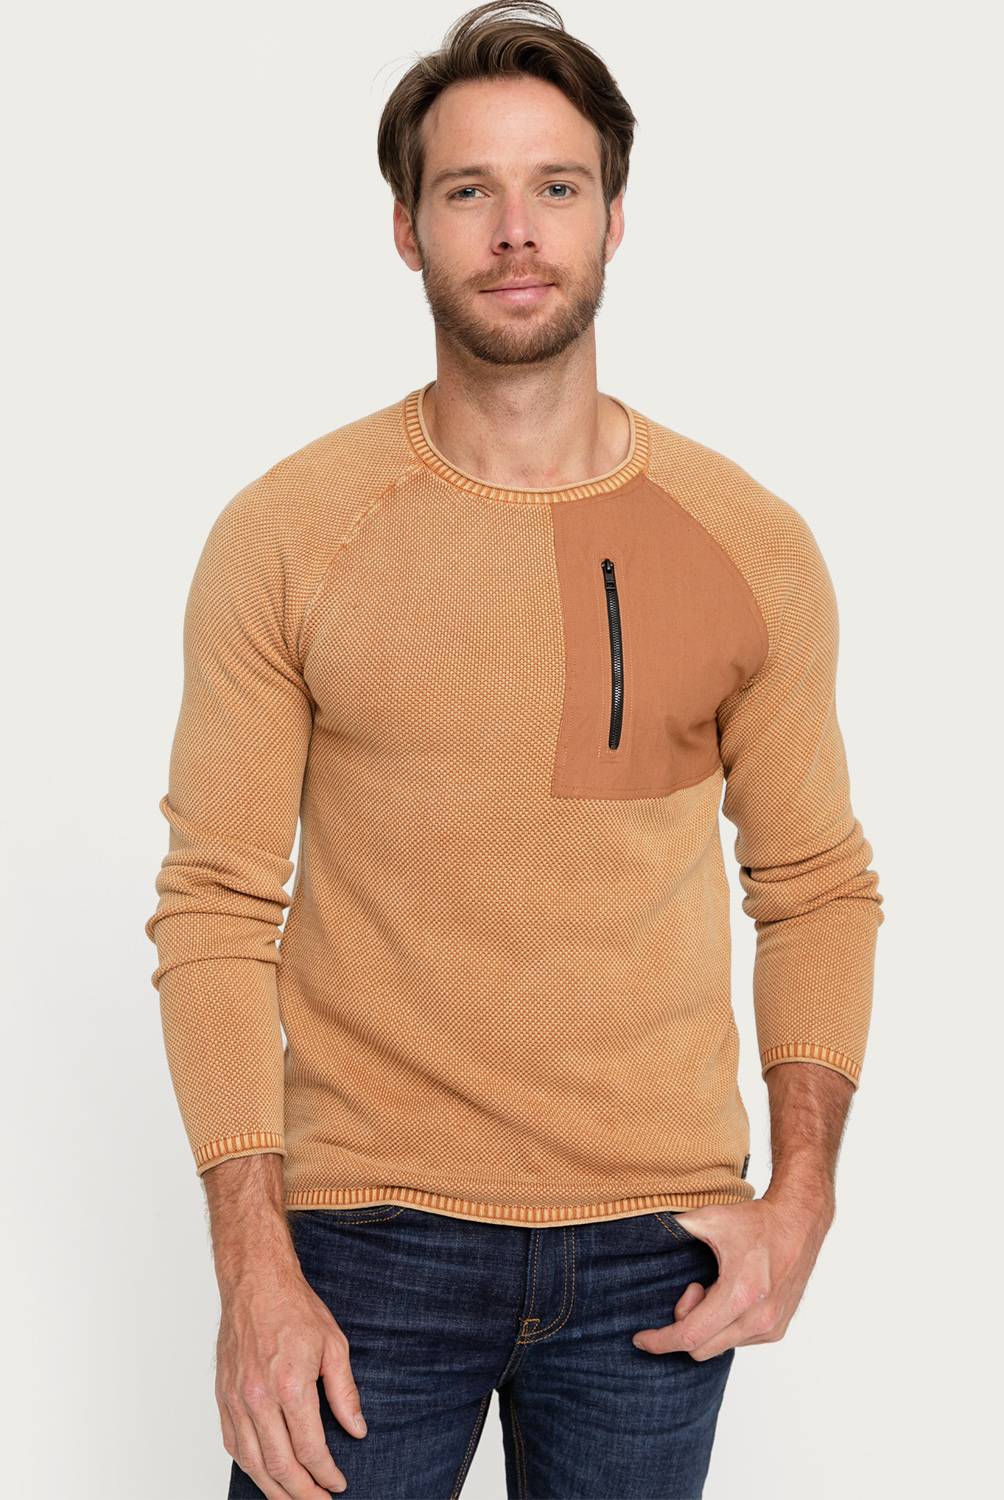 MOSSIMO - Sweater Hombre